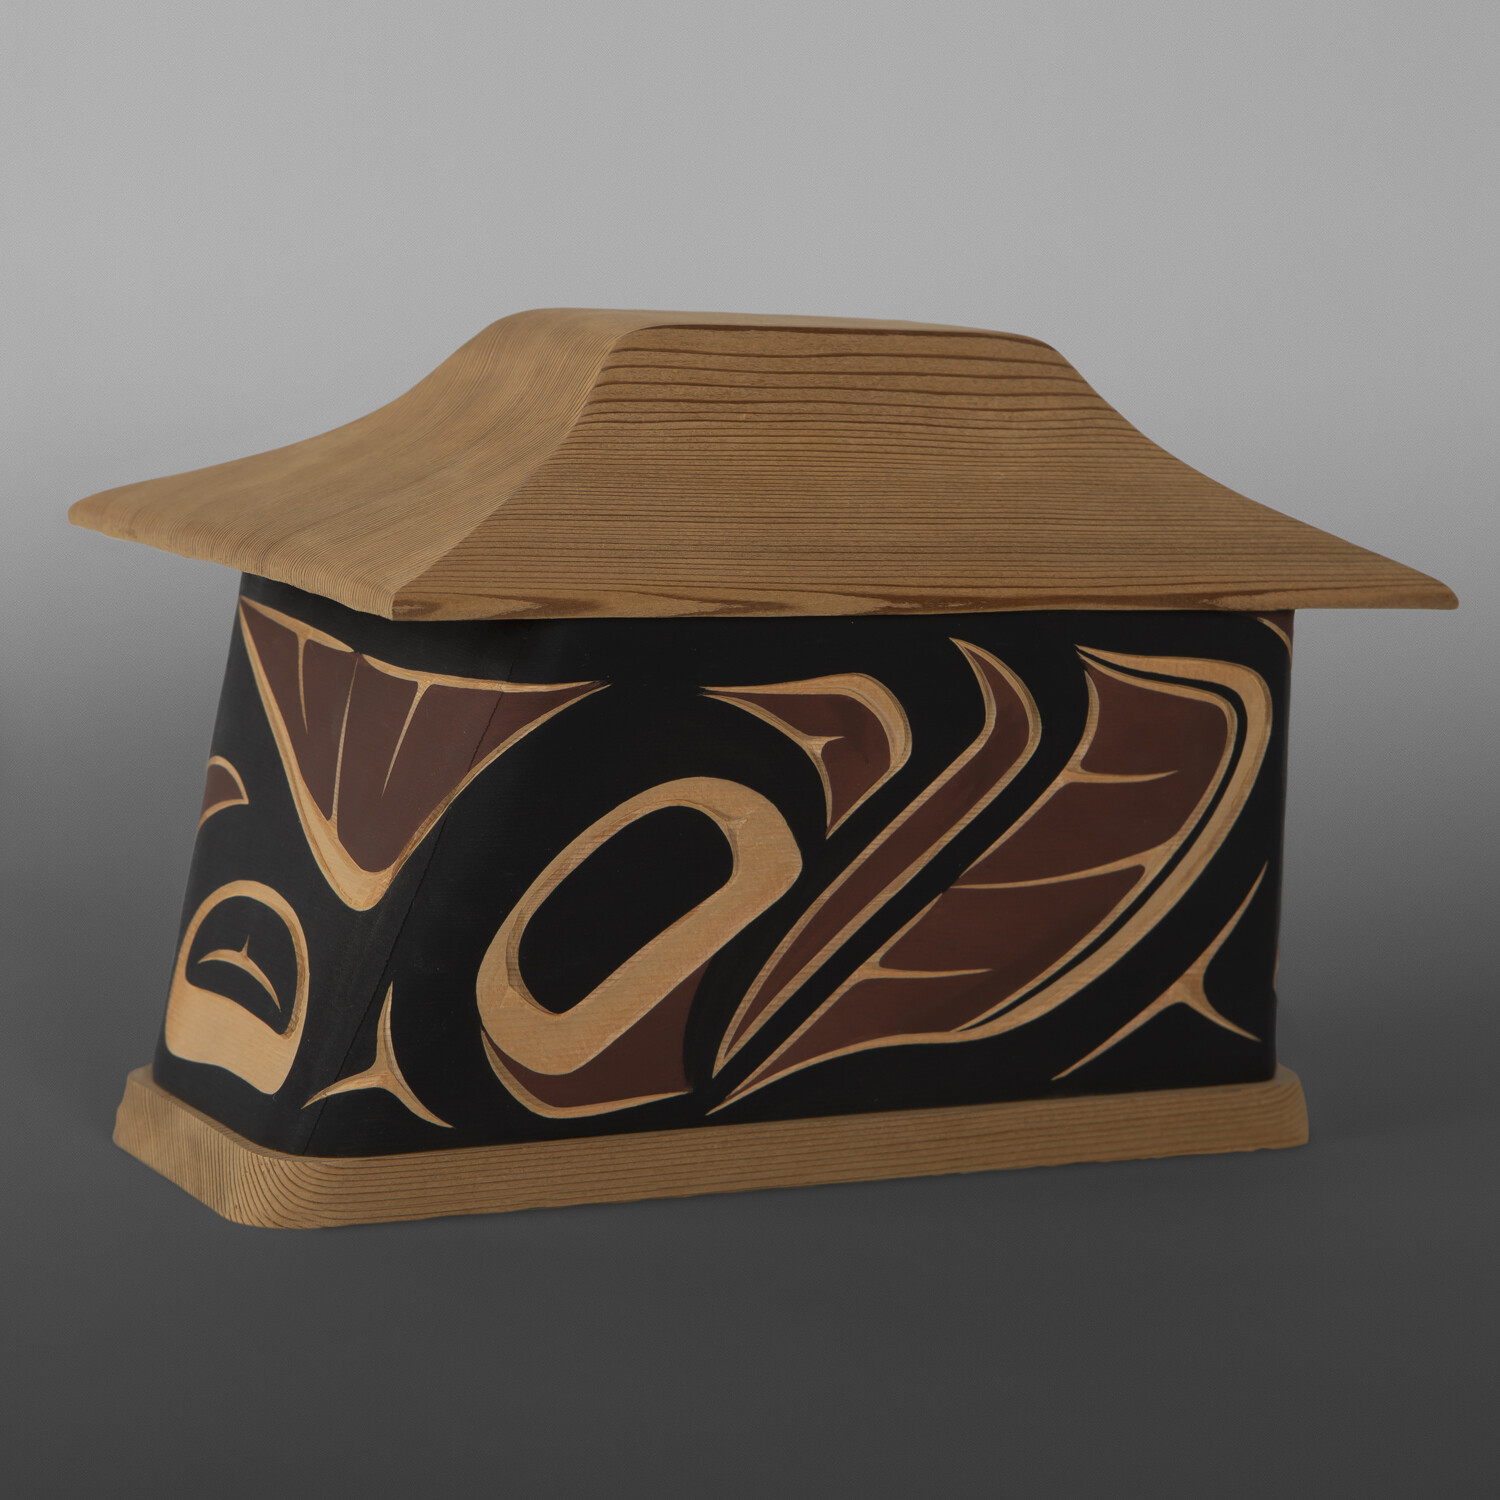 Salmon Canoe Box
Troy Bellerose
Coast Salish/Cree
Red & yellow cedar, paint
8" x 5½" x 5"
$500